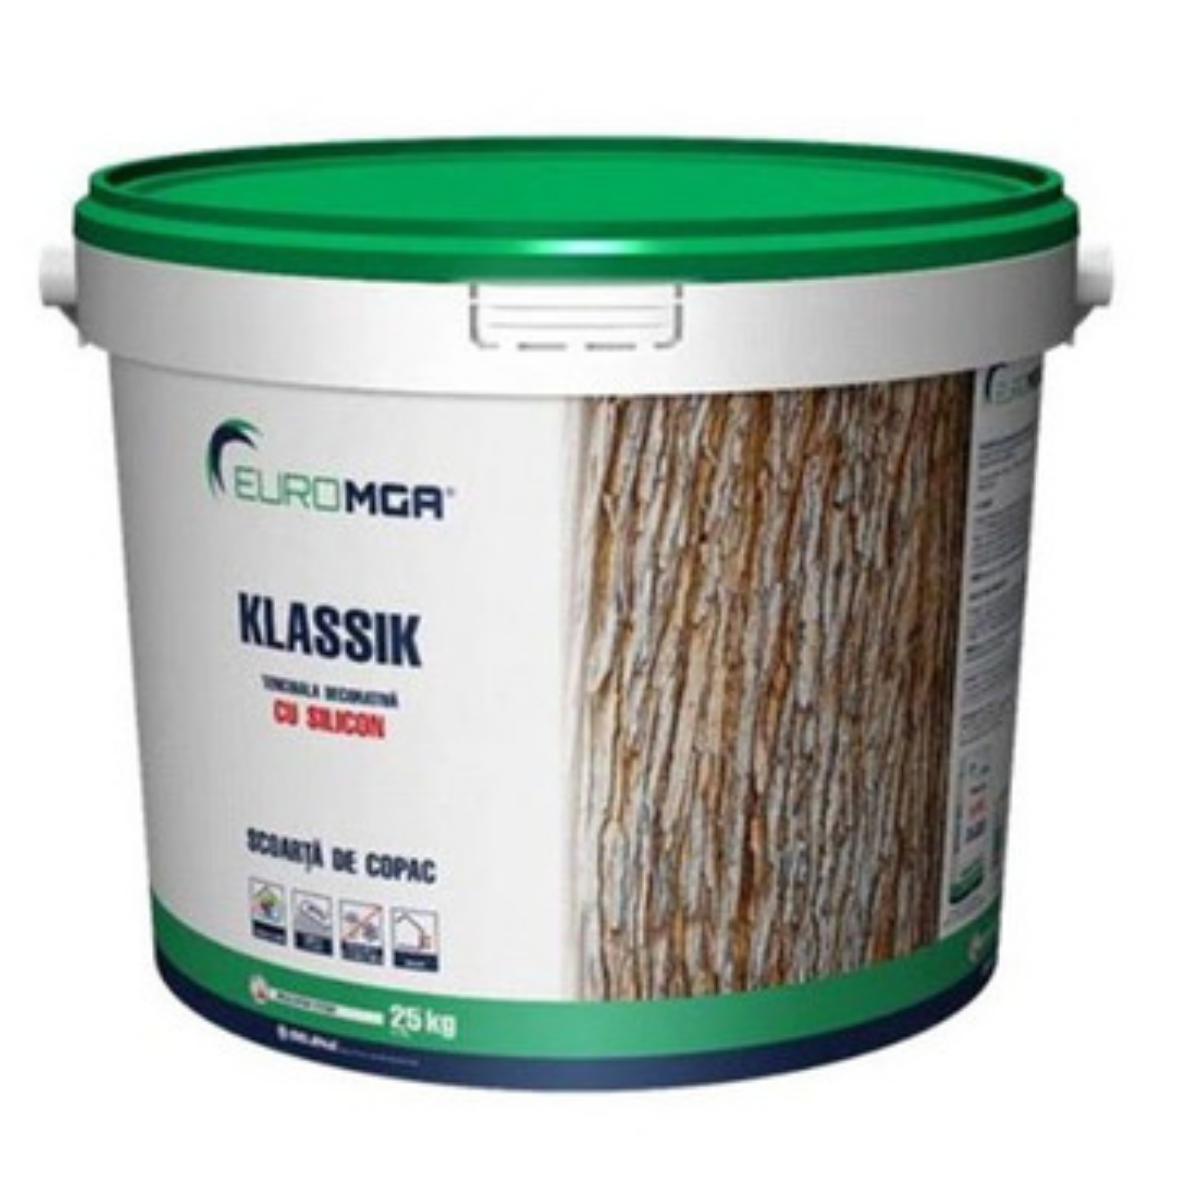 Decorative plasters - KLASSIK EuroMGA B15 25kg Silicone Decorative Plaster, https:maxbau.ro